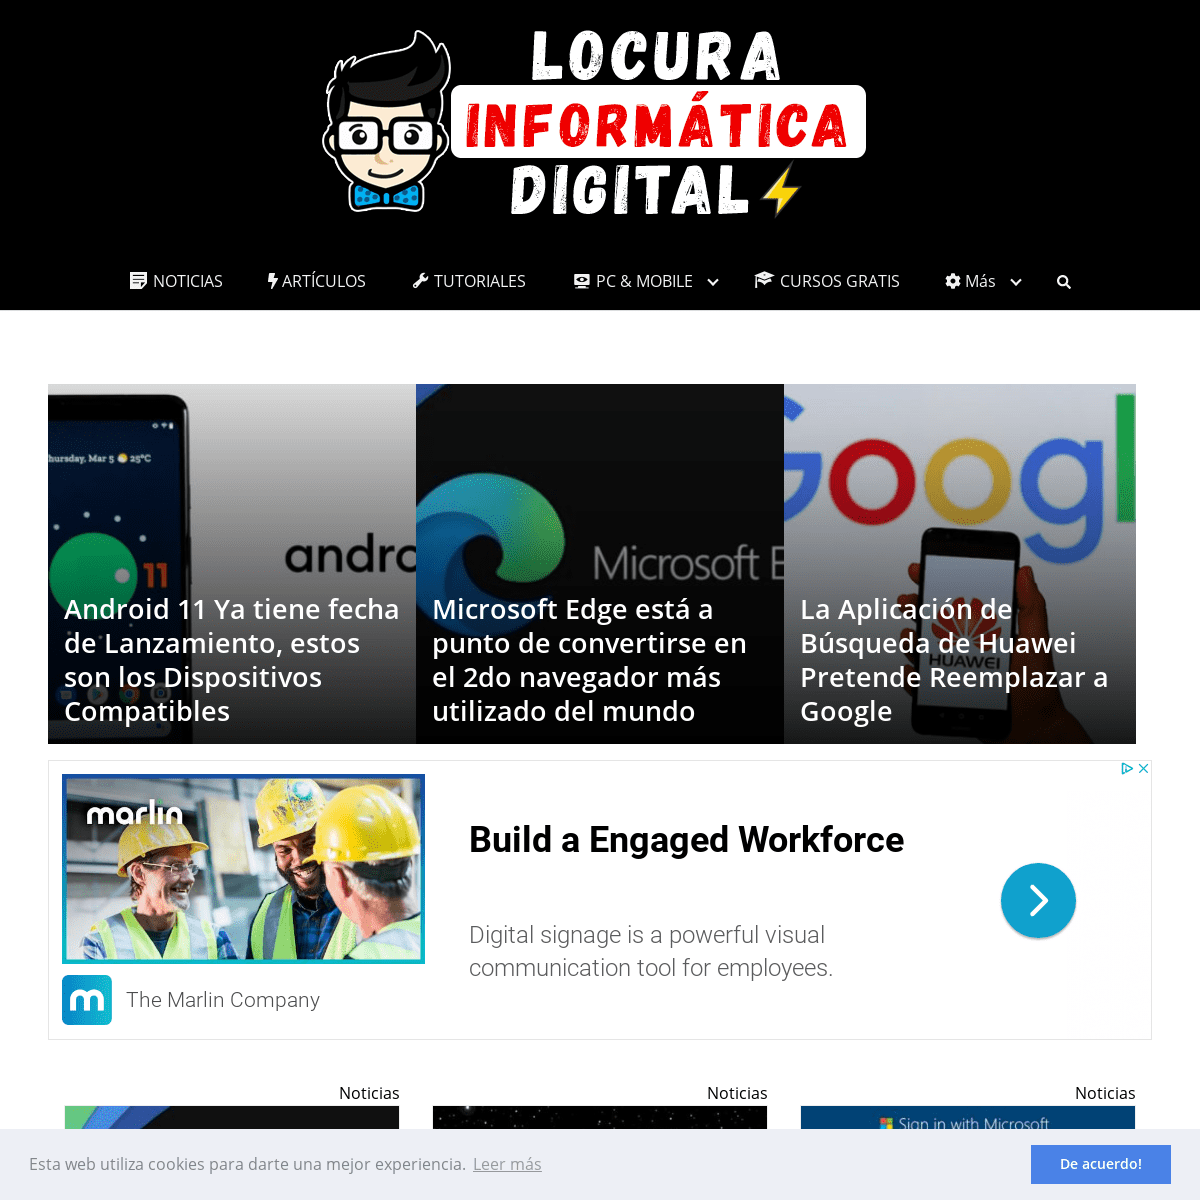 A complete backup of locurainformaticadigital.com